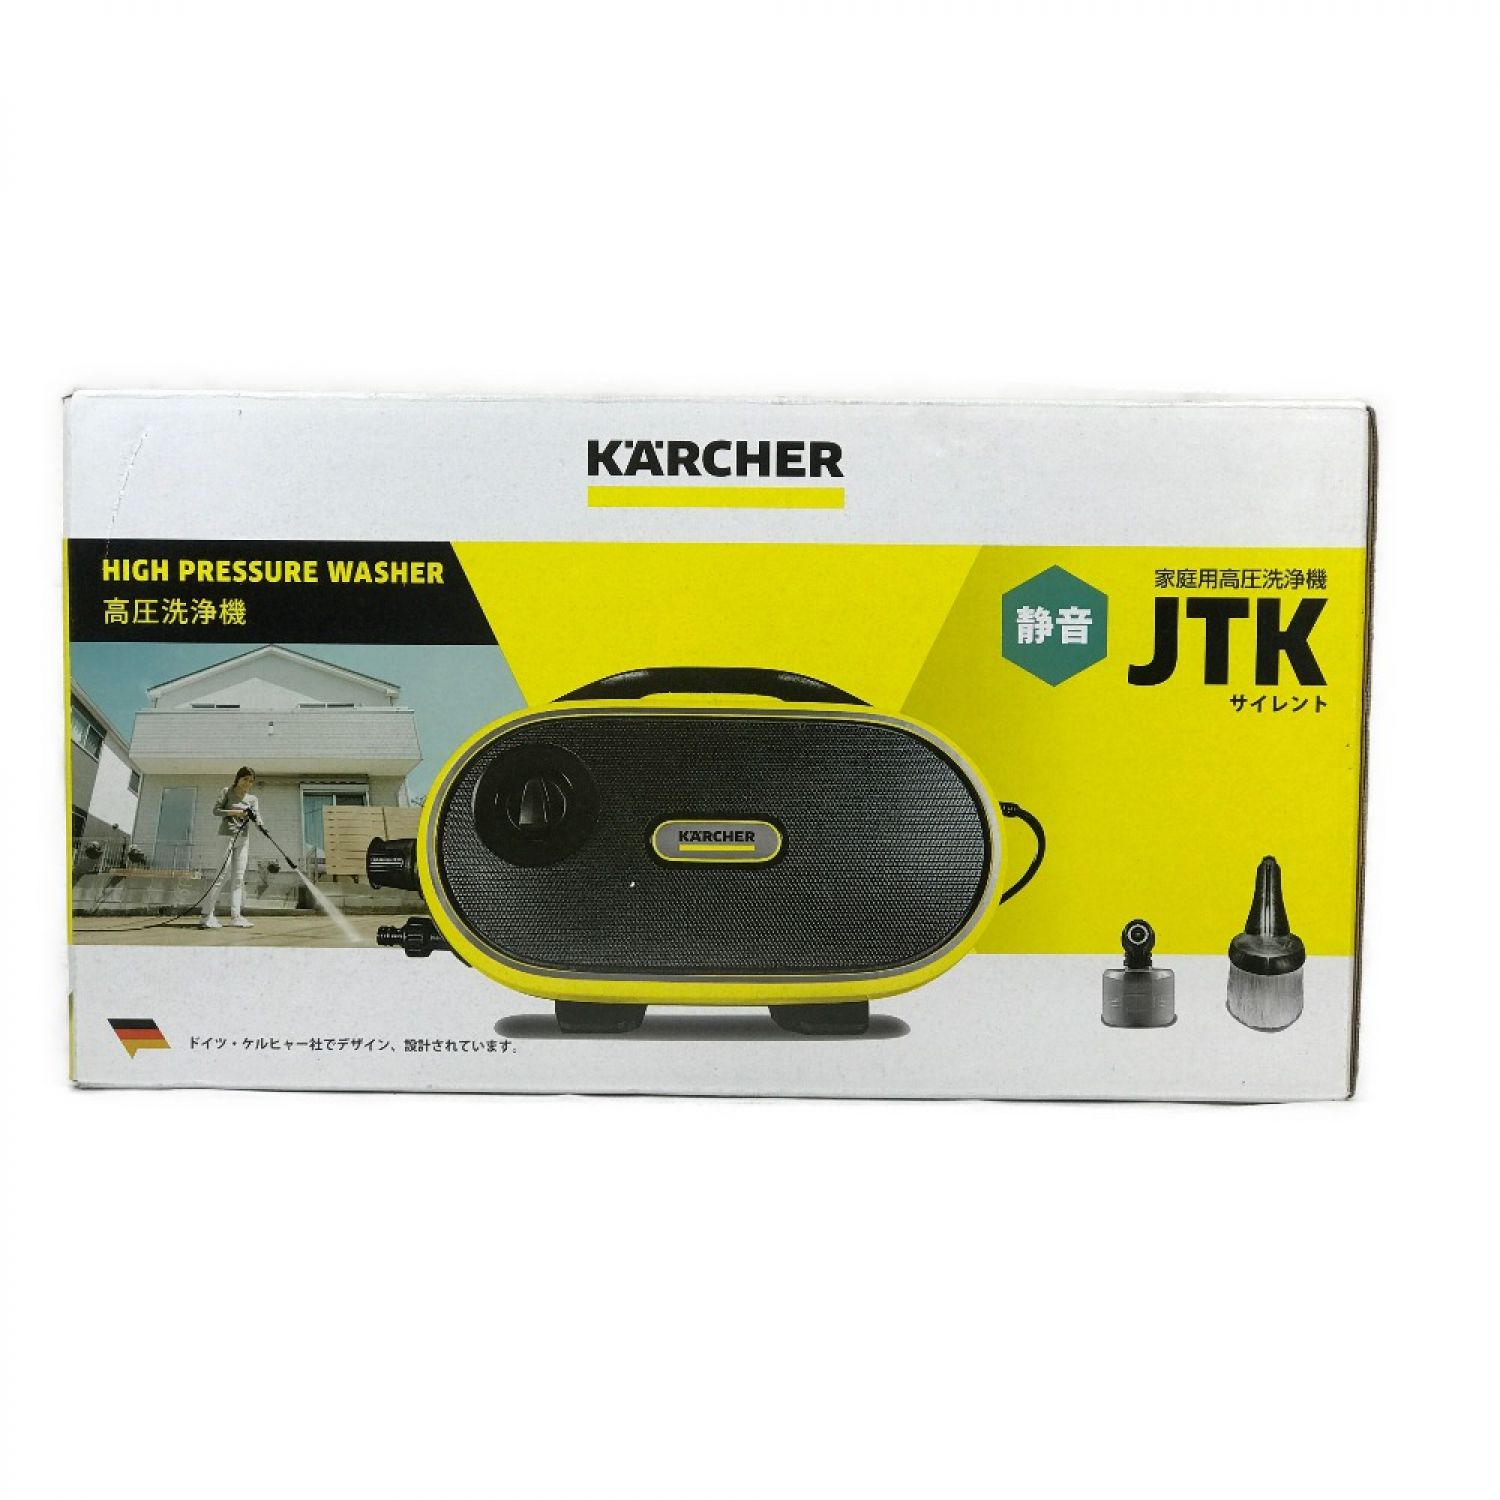 KARCHER JTK サイレントS 家庭用高圧洗浄機-